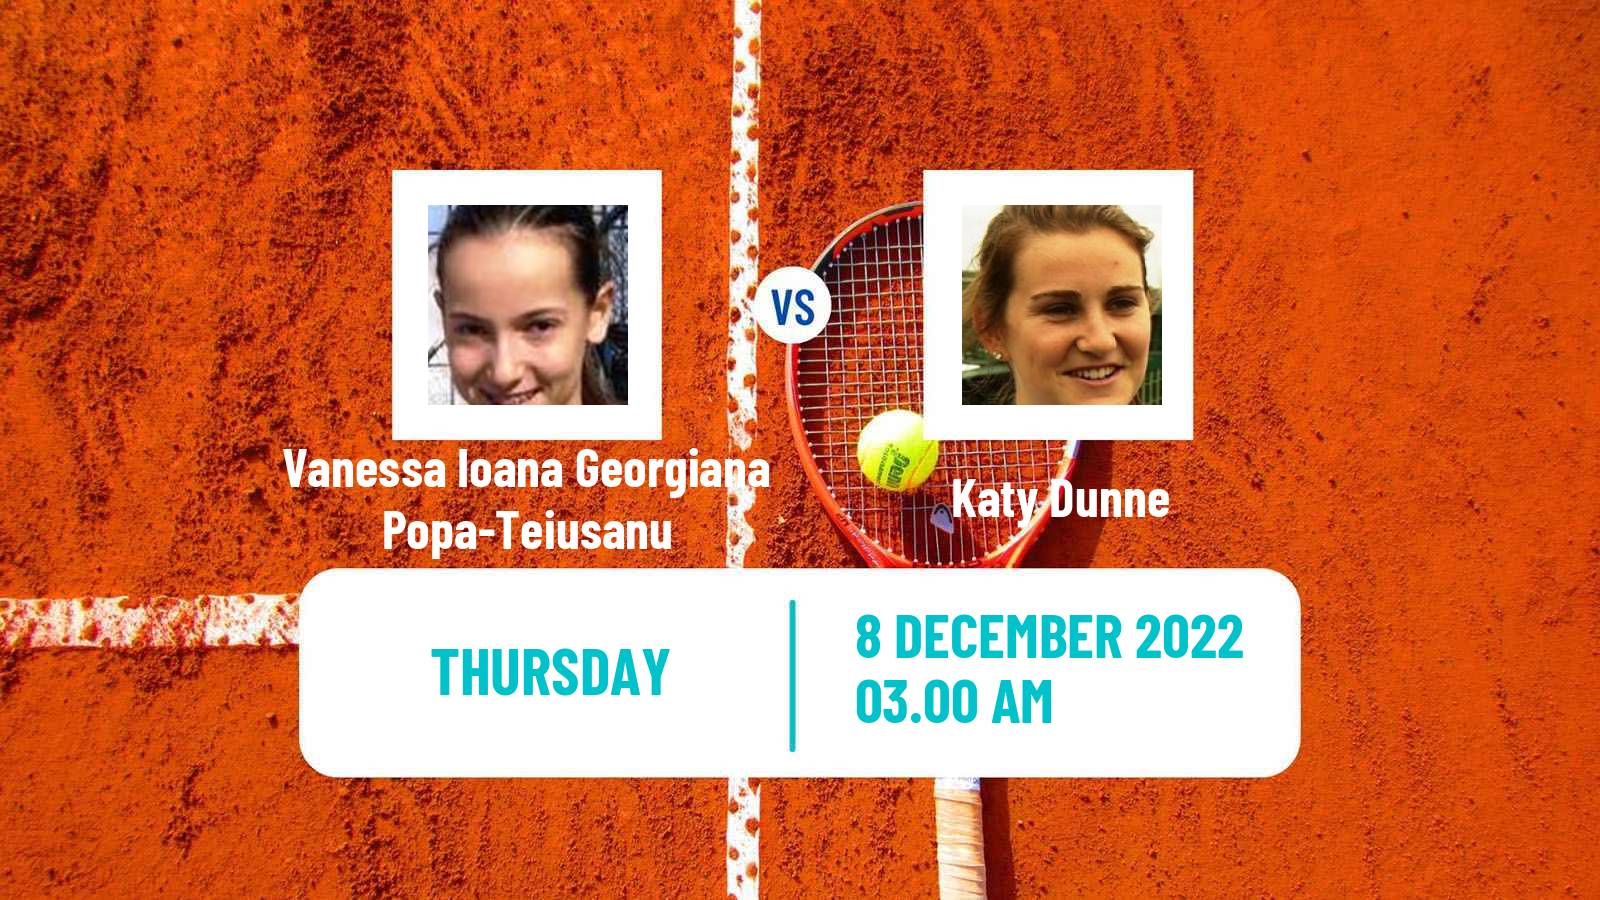 Tennis ITF Tournaments Vanessa Ioana Georgiana Popa-Teiusanu - Katy Dunne